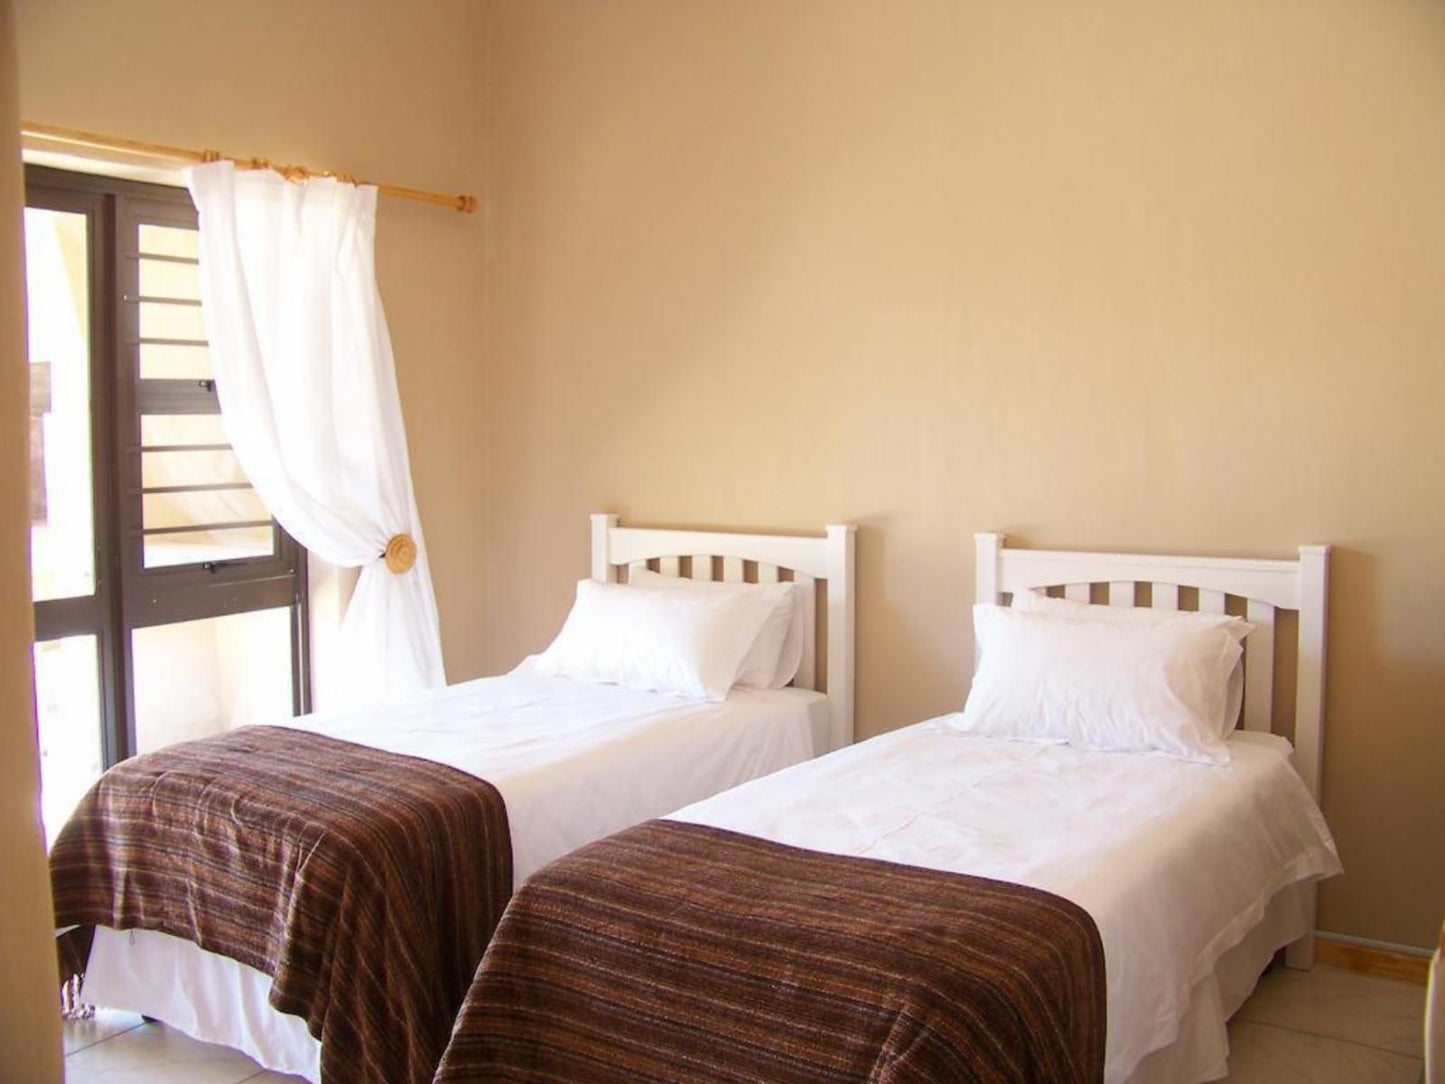 Laaiplek Hotel Velddrif Western Cape South Africa Bedroom